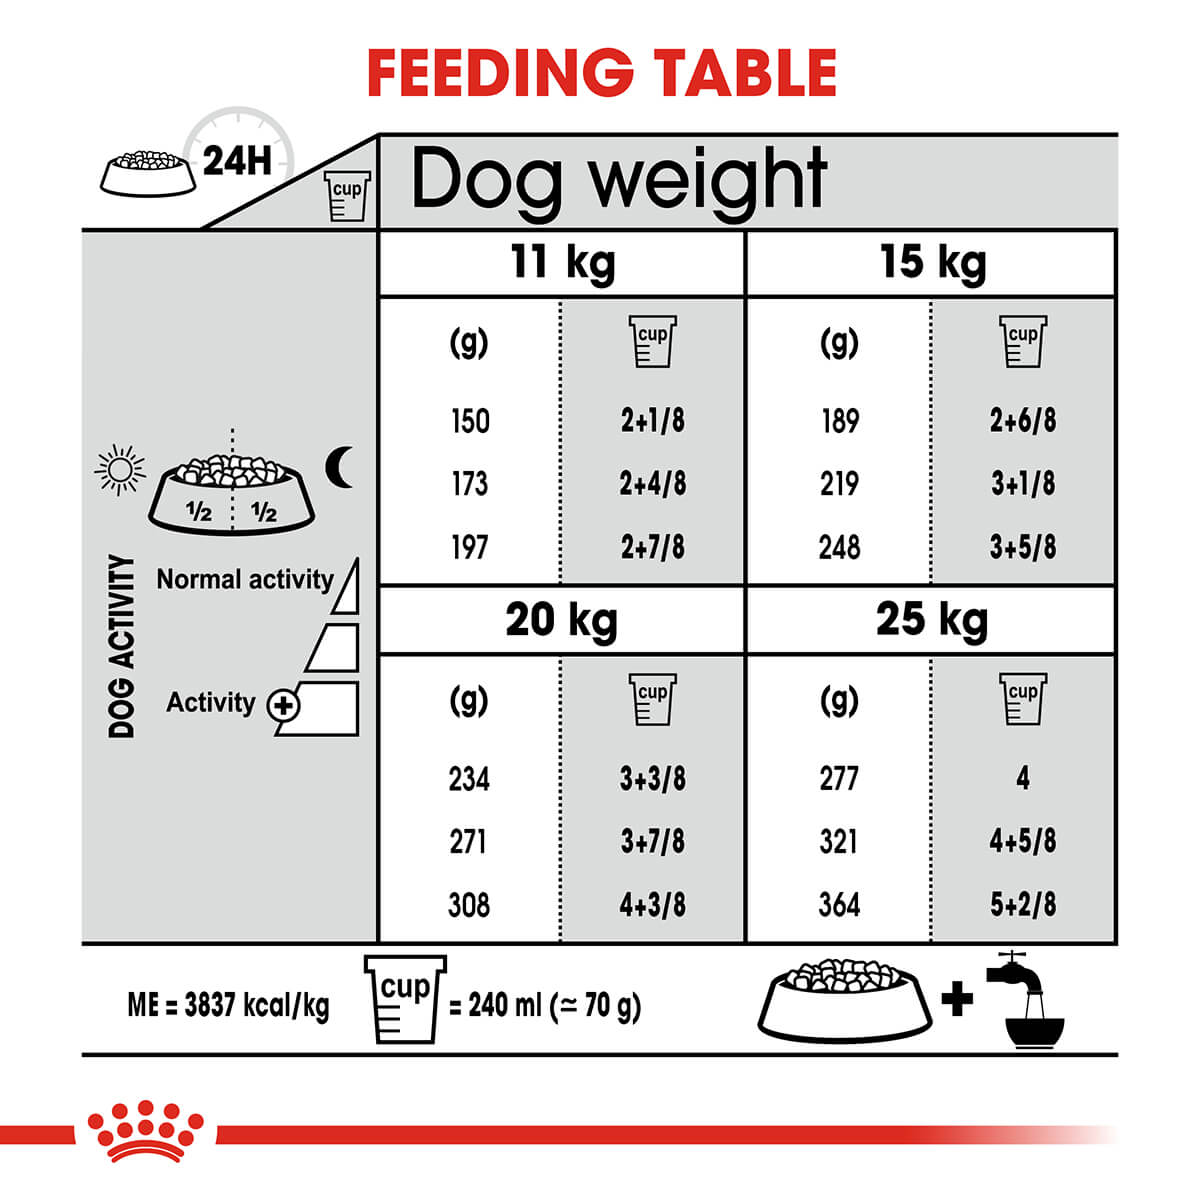 Royal Canin Medium Dental Care Adult Dry Dog Food (100000018994) [default_color]